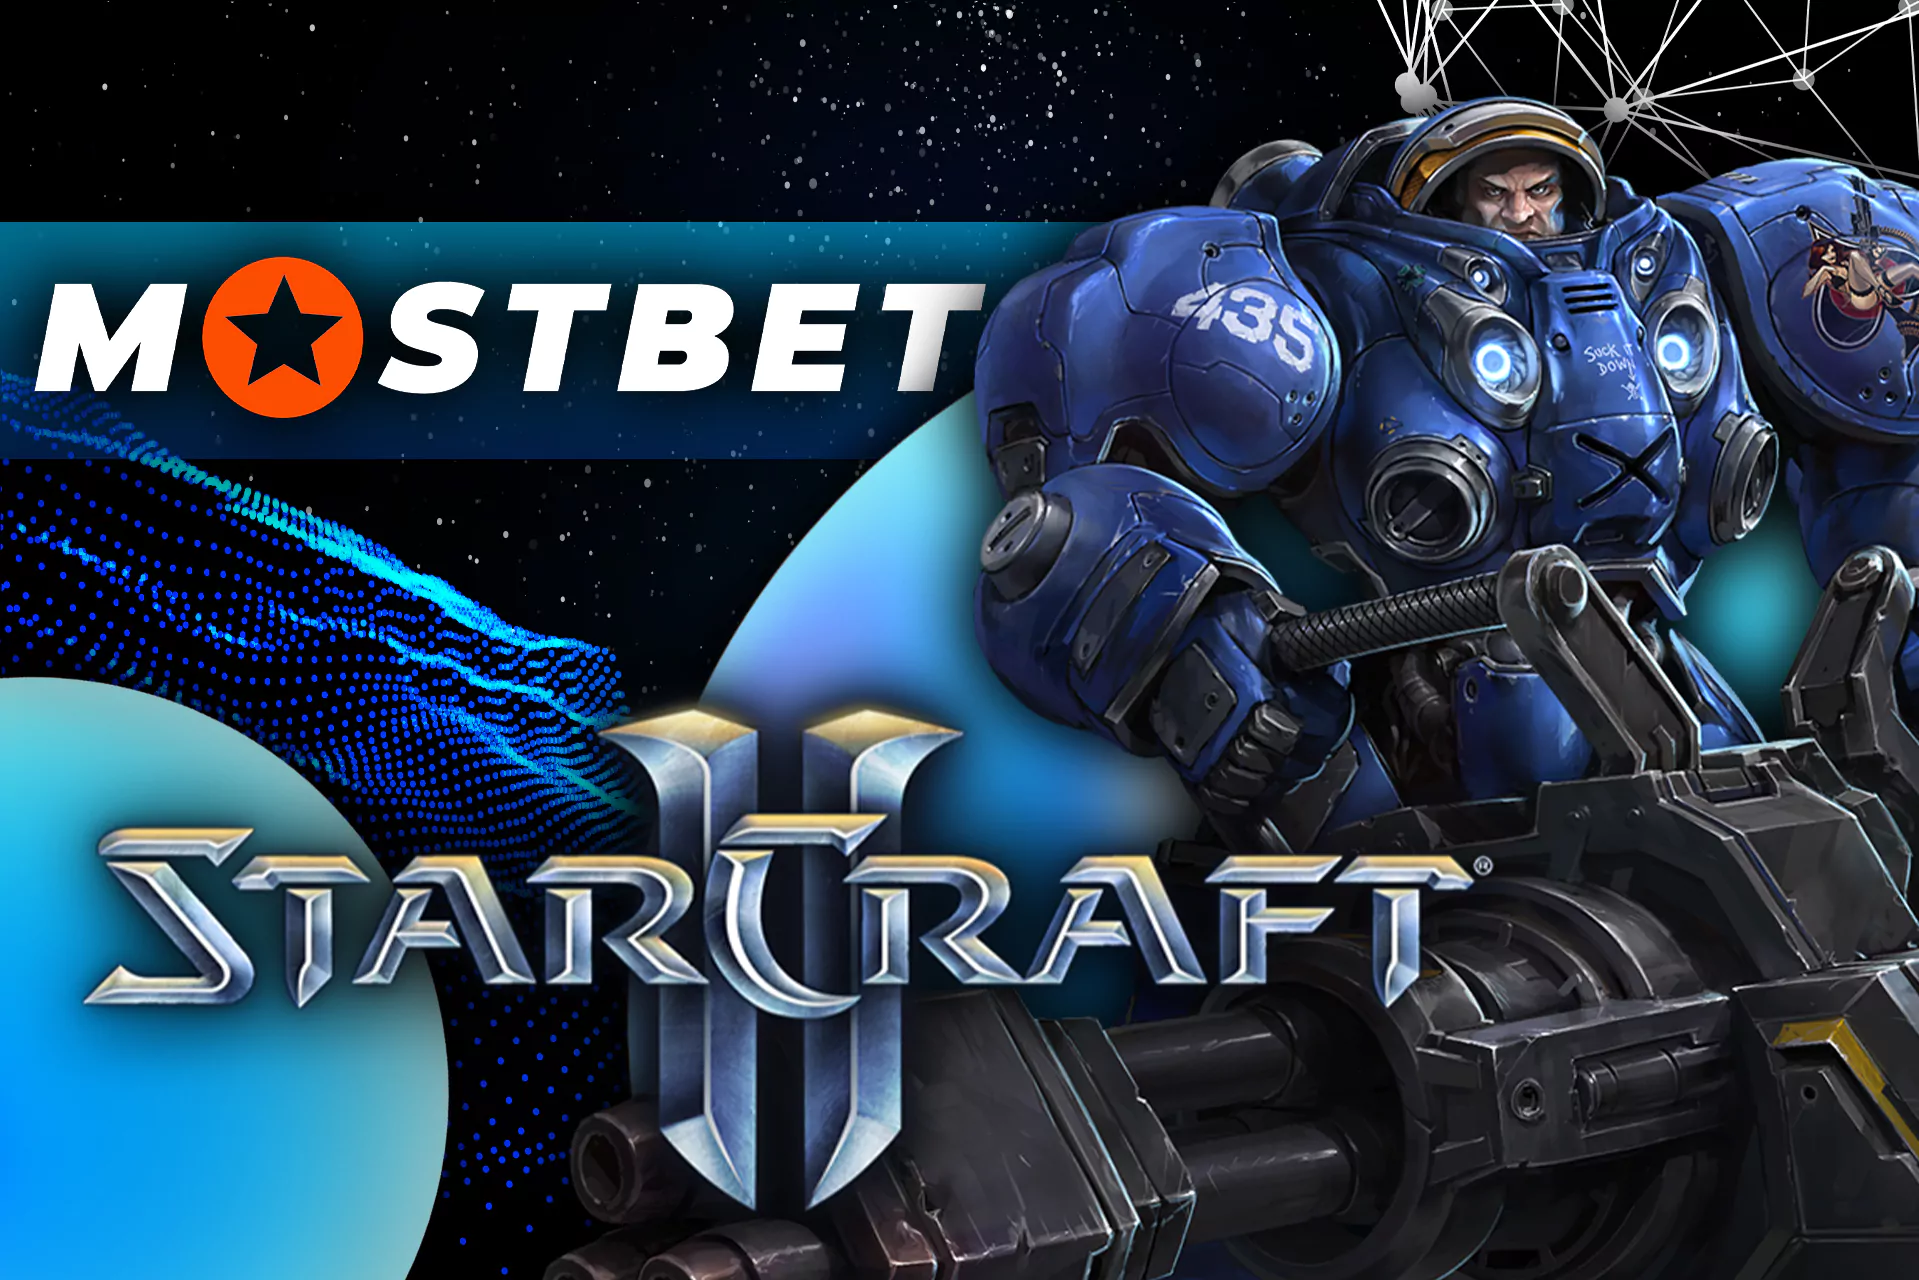 Starcraft 2 at Mostbet.